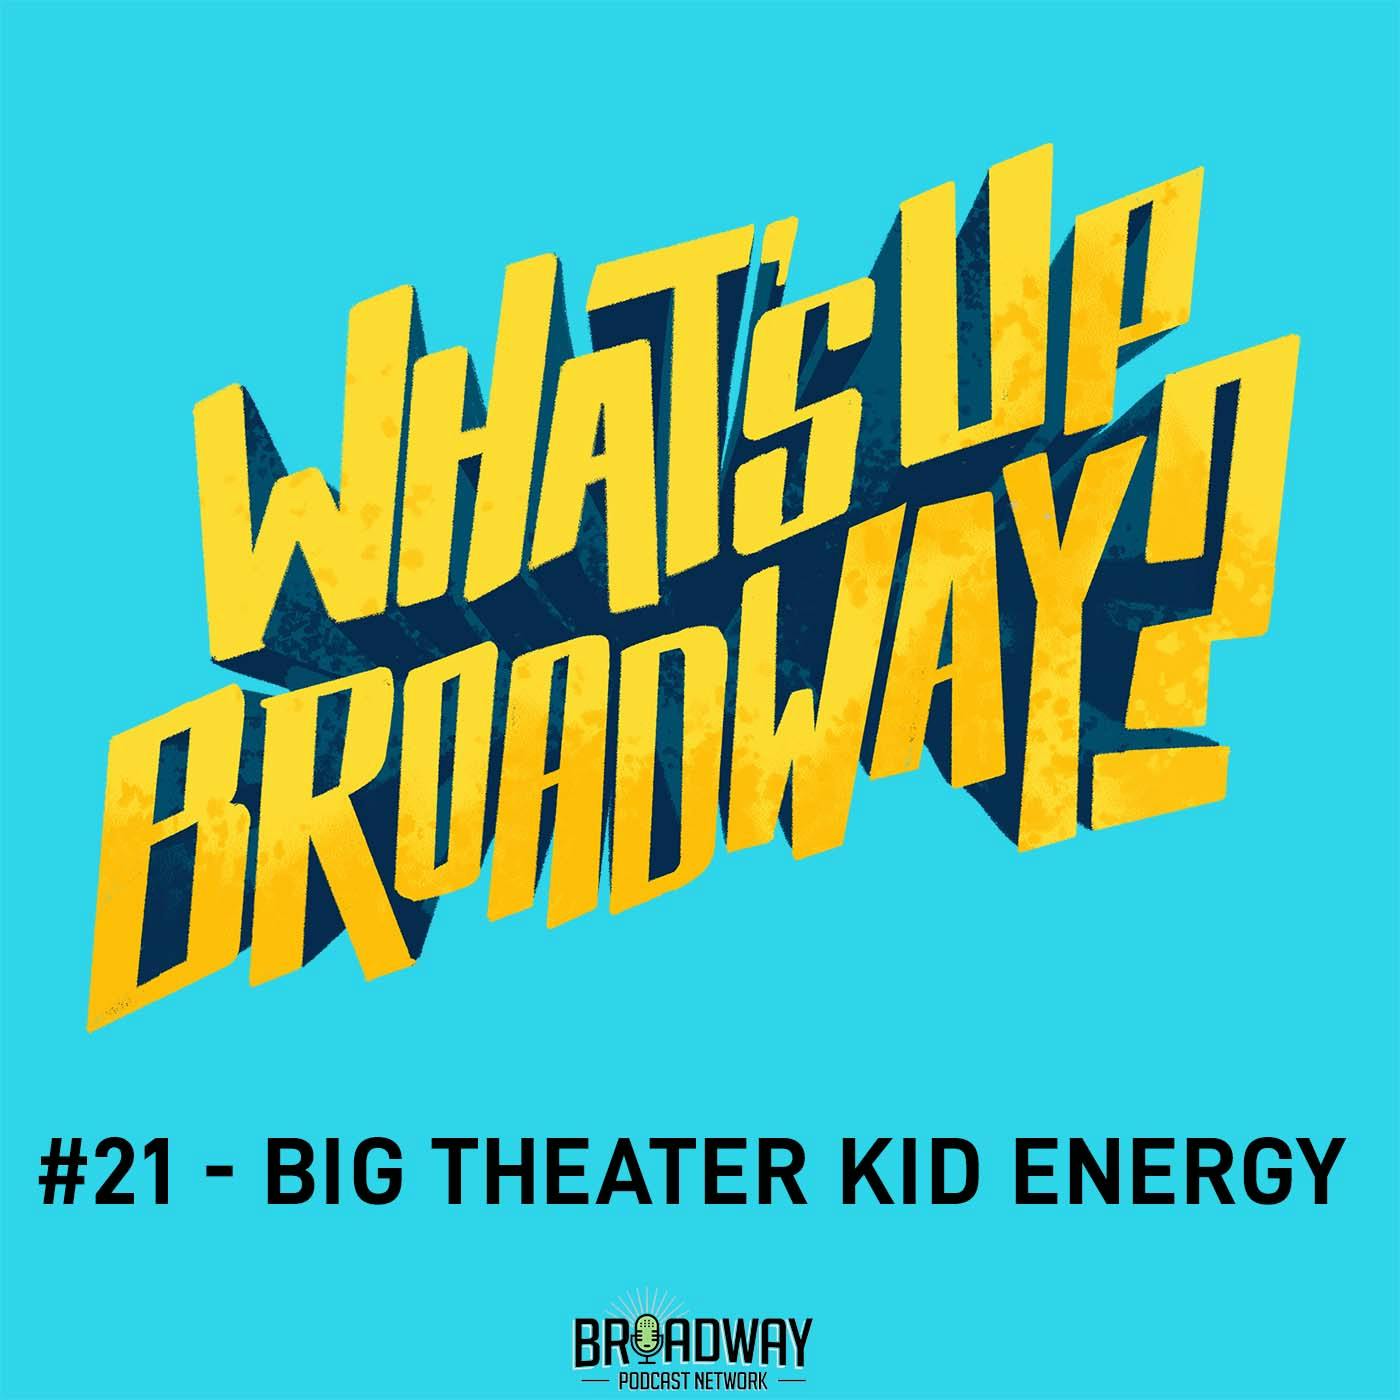 #21 - Big Theater Kid Energy!